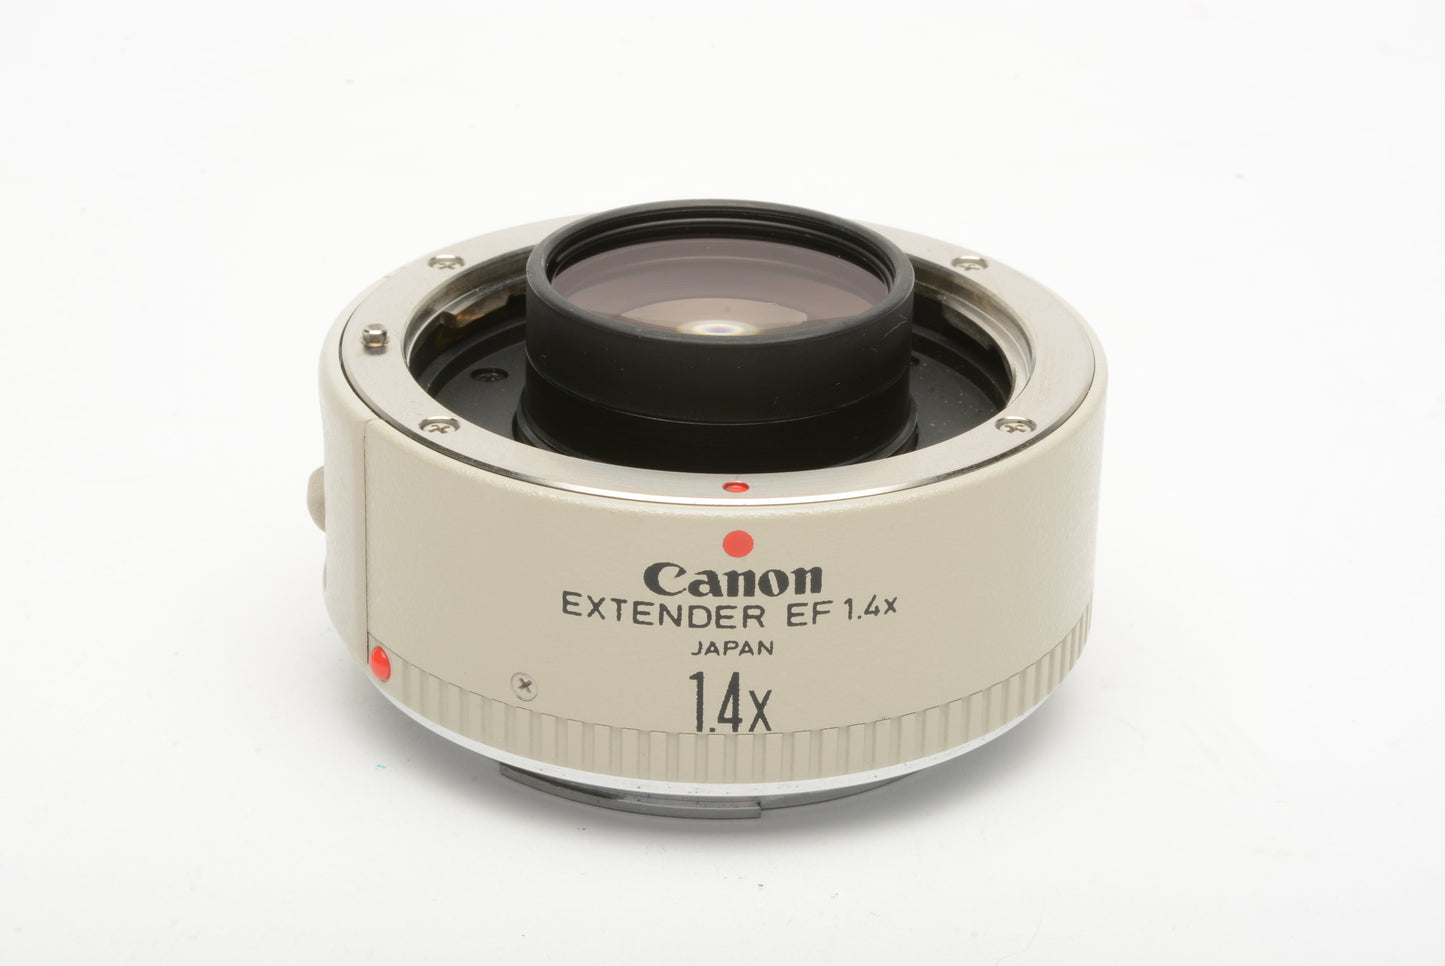 Canon EF 1.4X Teleconverter, cap, pouch, very clean & sharp